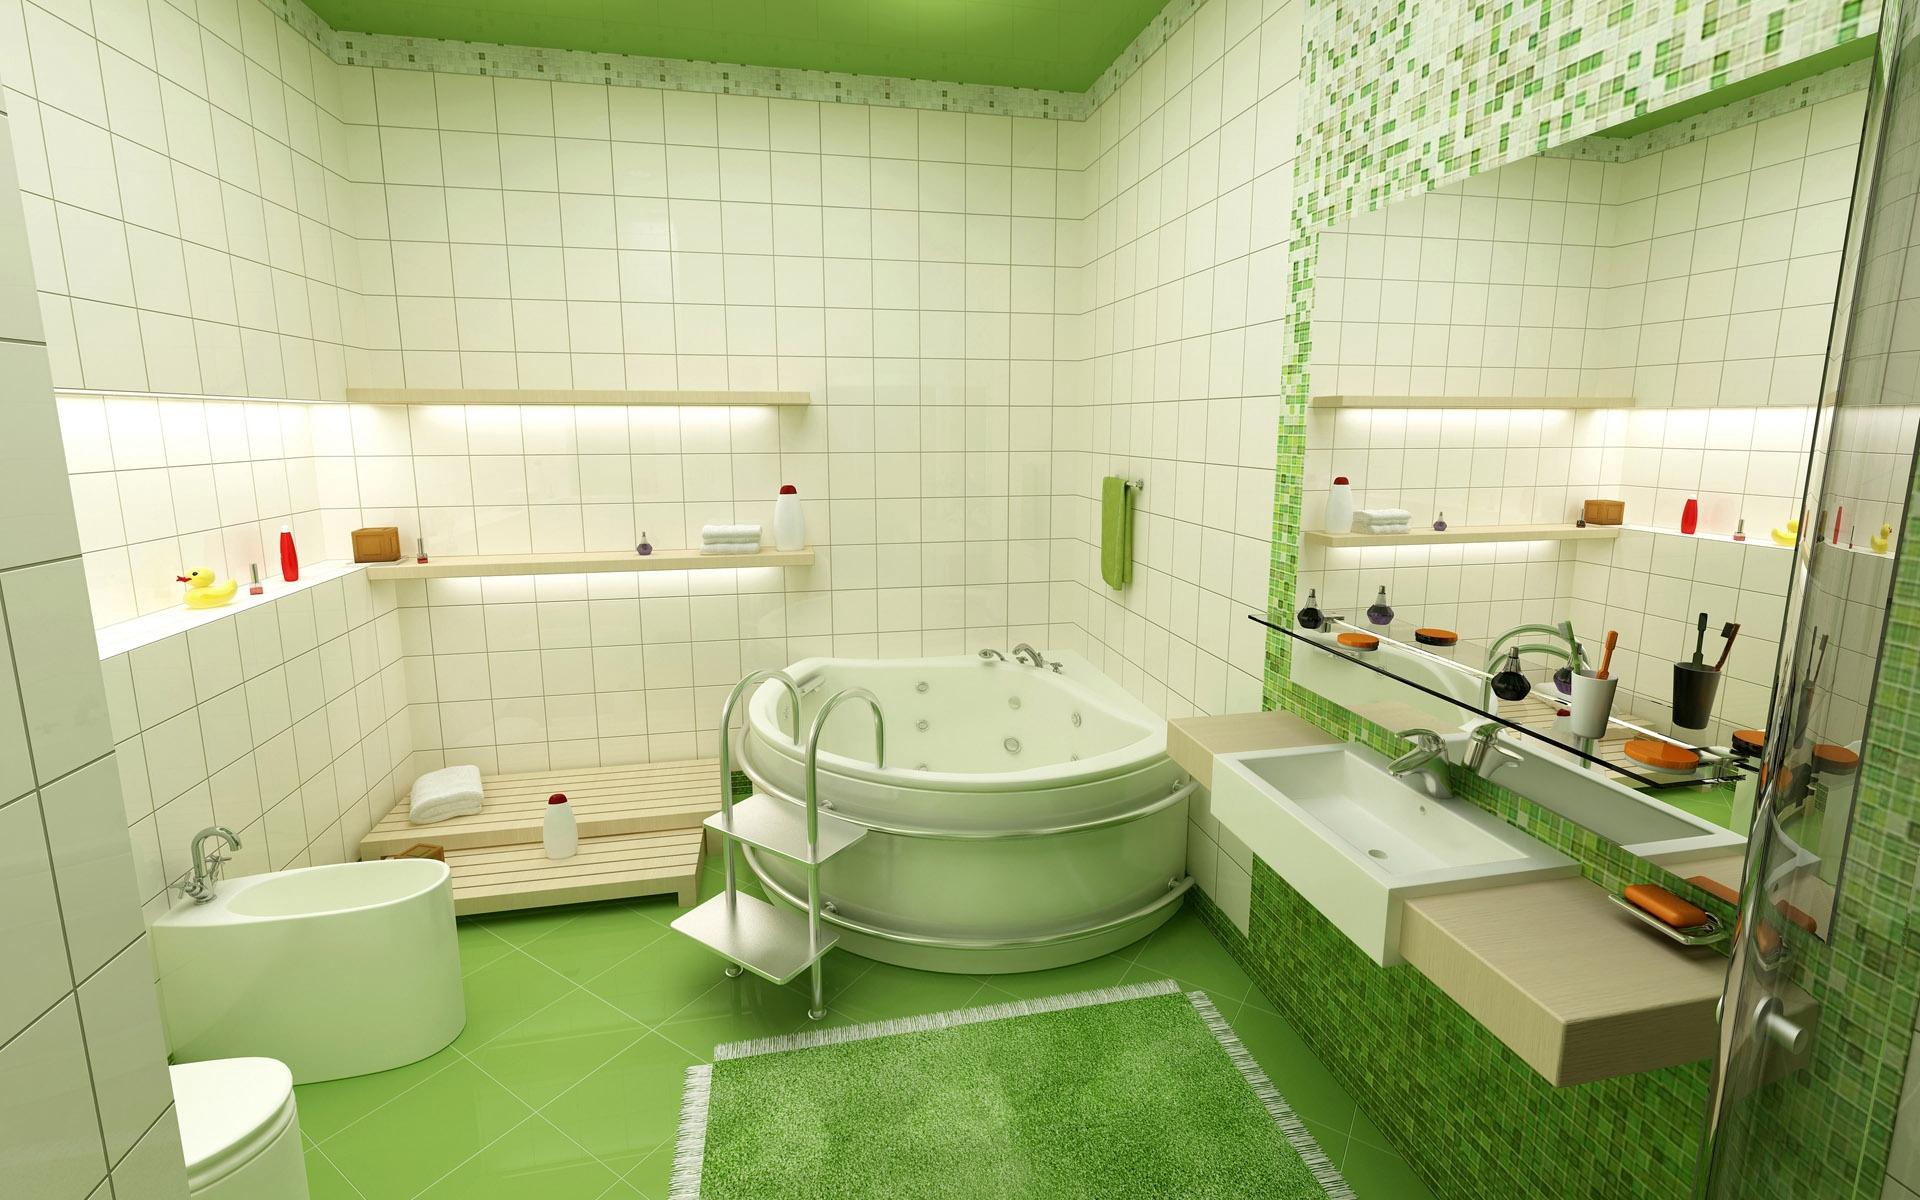 Download wallpaper 1920x1200 bathroom, tile, style, plumbing